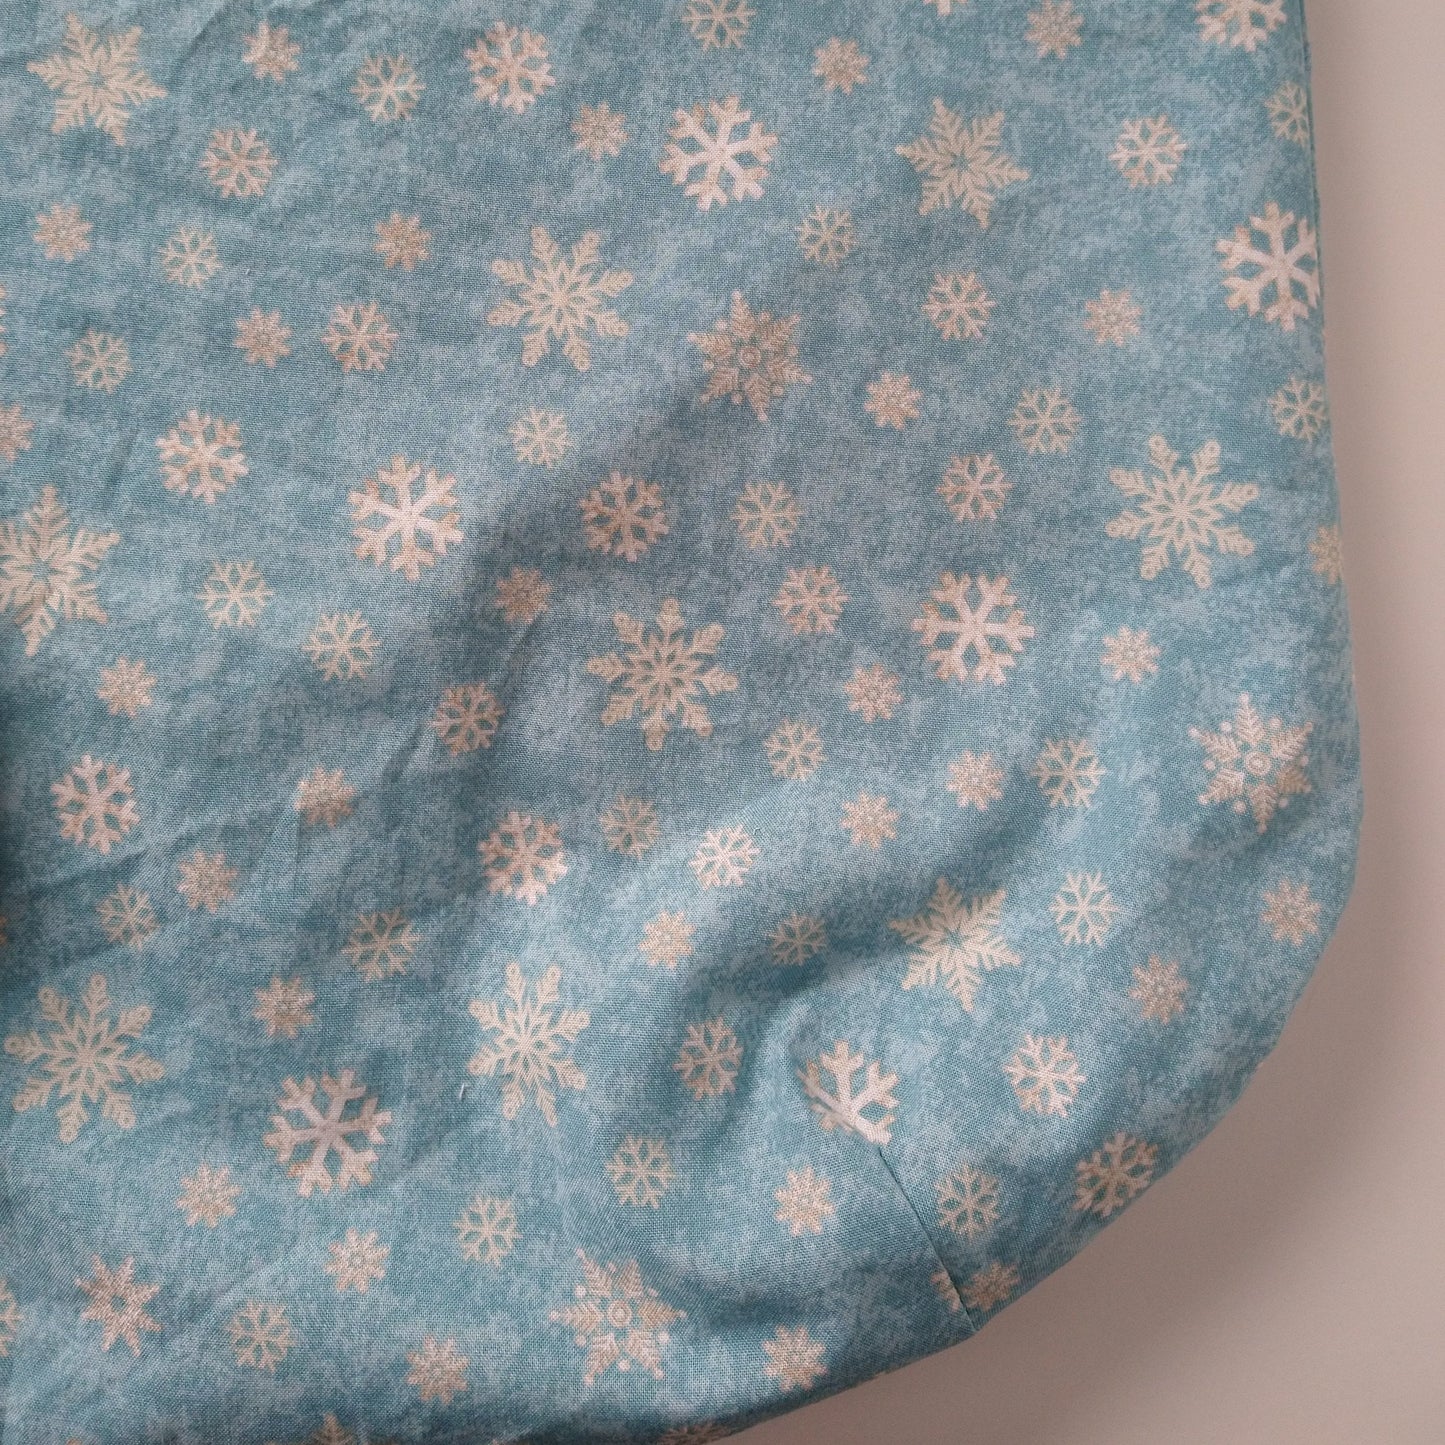 Shopping bag, reversible, size medium, Winter snowflakes (Handmade in Canada)